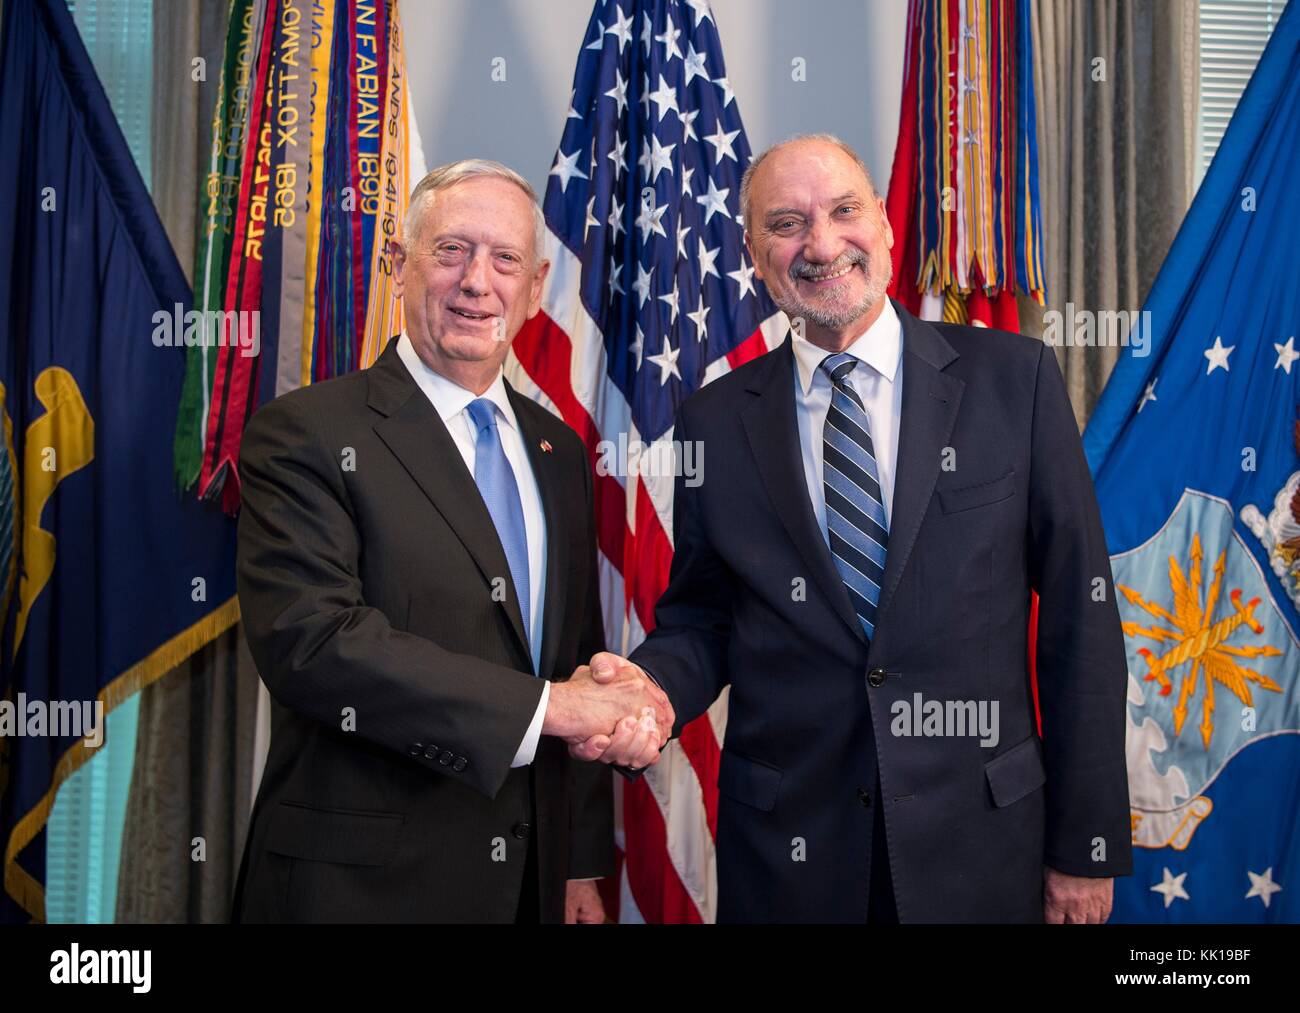 U.S. Defense Secretary James Mattis (left) meets with Polish Defense Minister Antoni Macierewicz at the Pentagon September 21, 2017 in Washington, DC.(photo by Brigitte N. Brantley  via Planetpix) Stock Photo